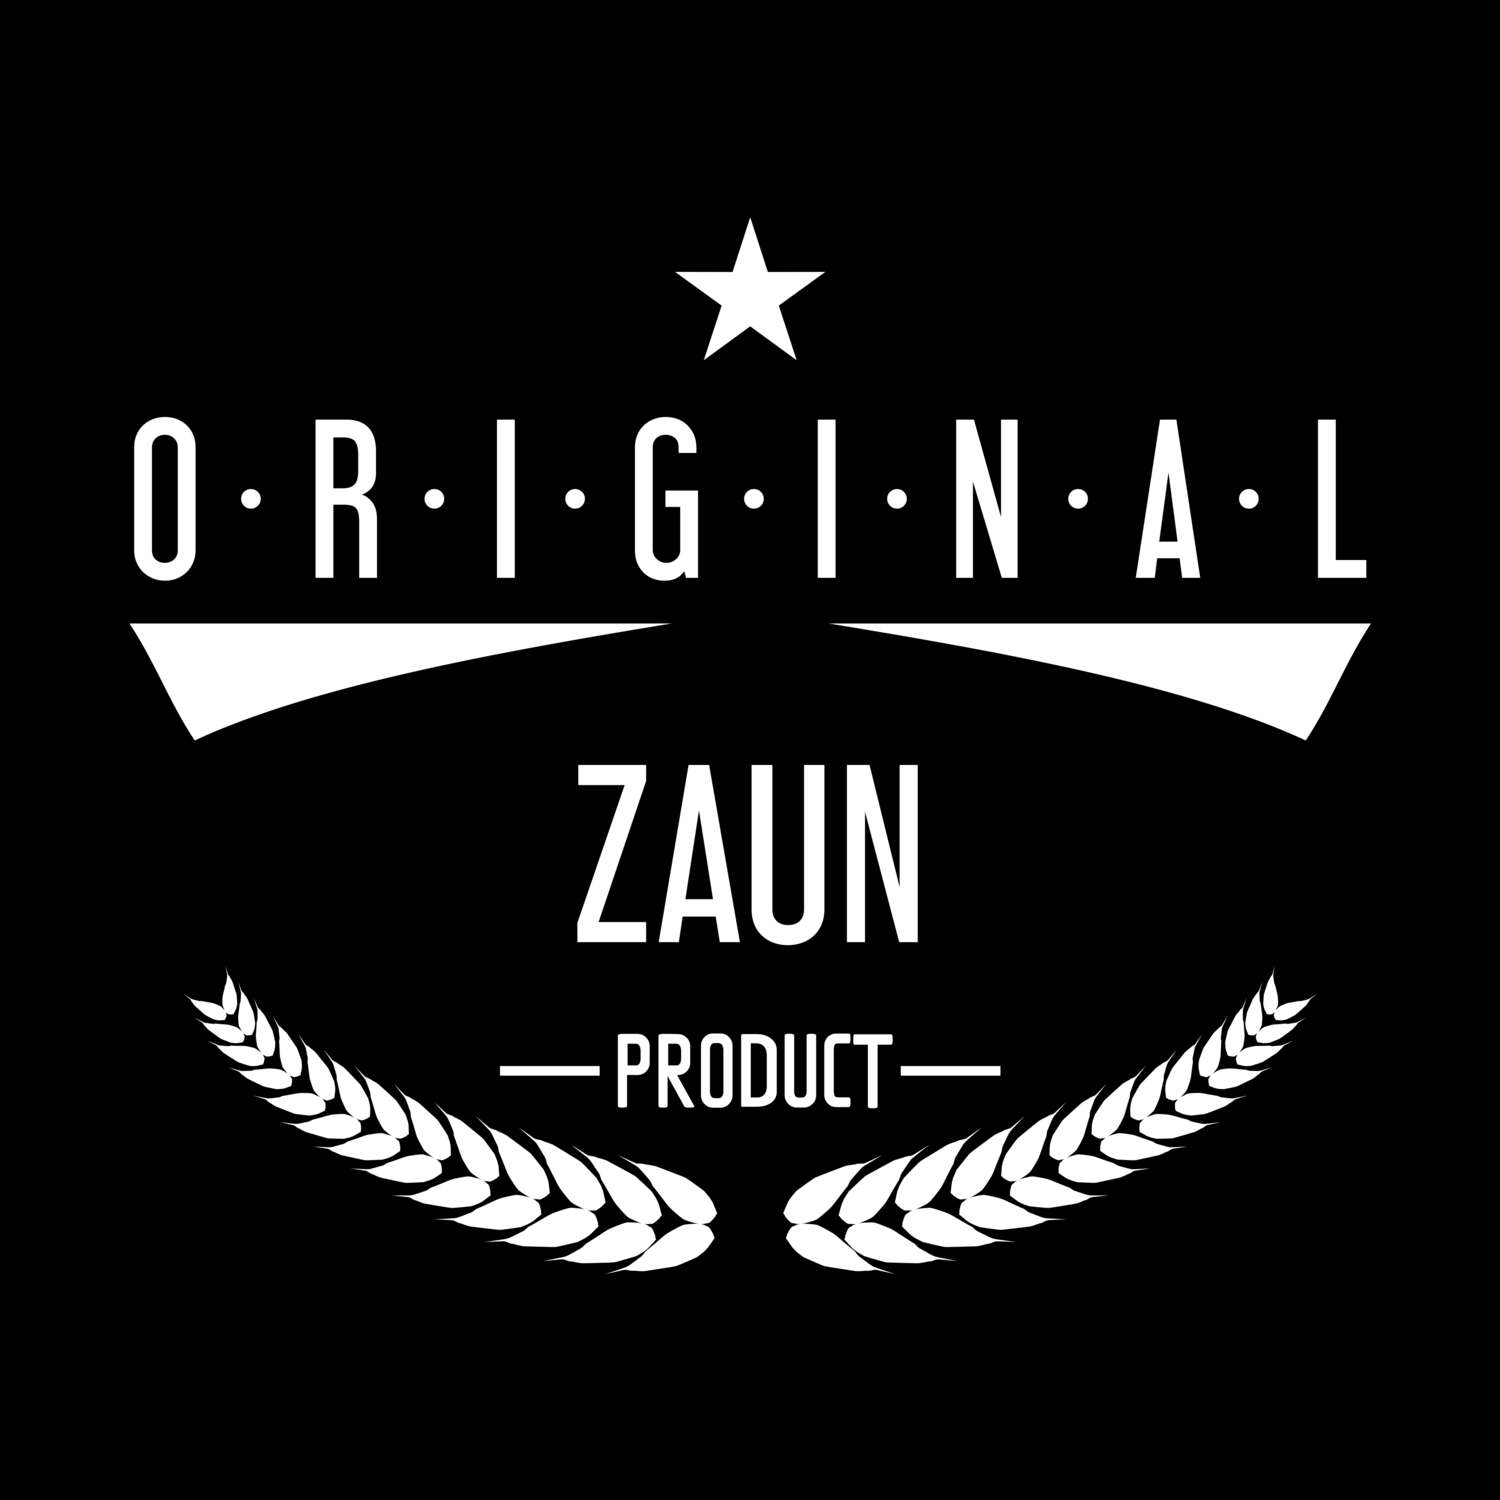 Zaun T-Shirt »Original Product«